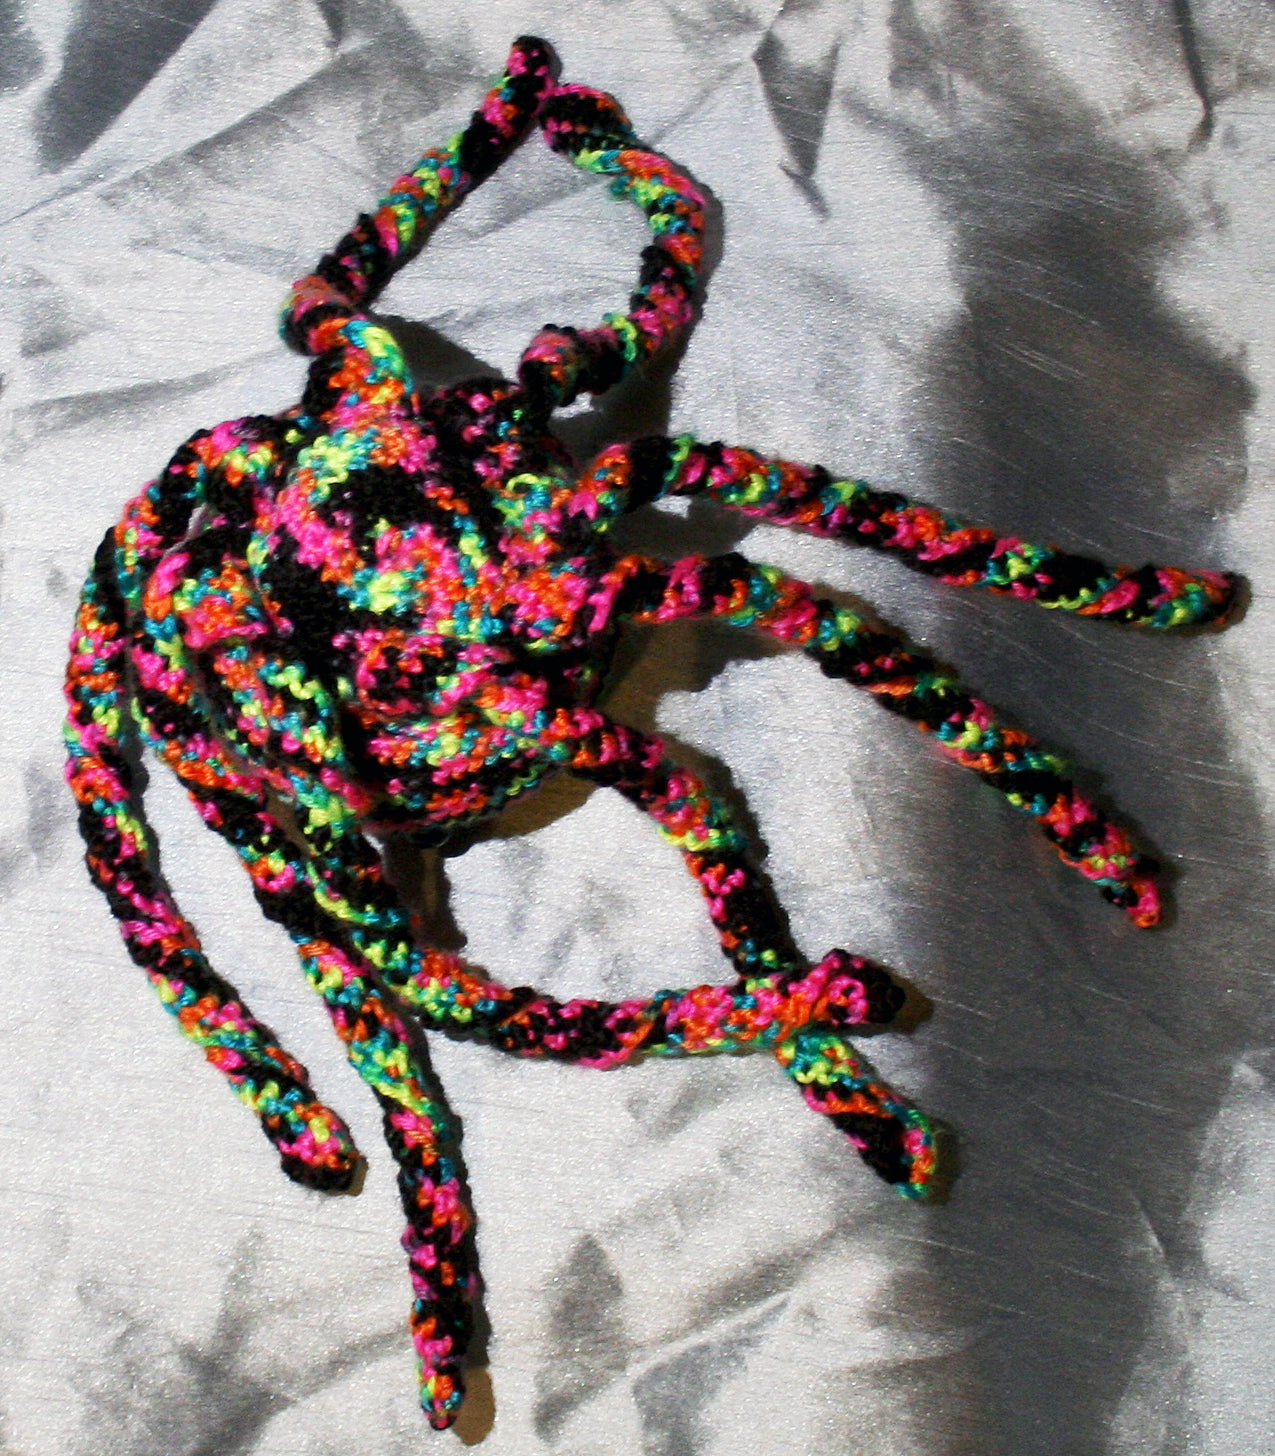 Crochet Amigurumi Octopus